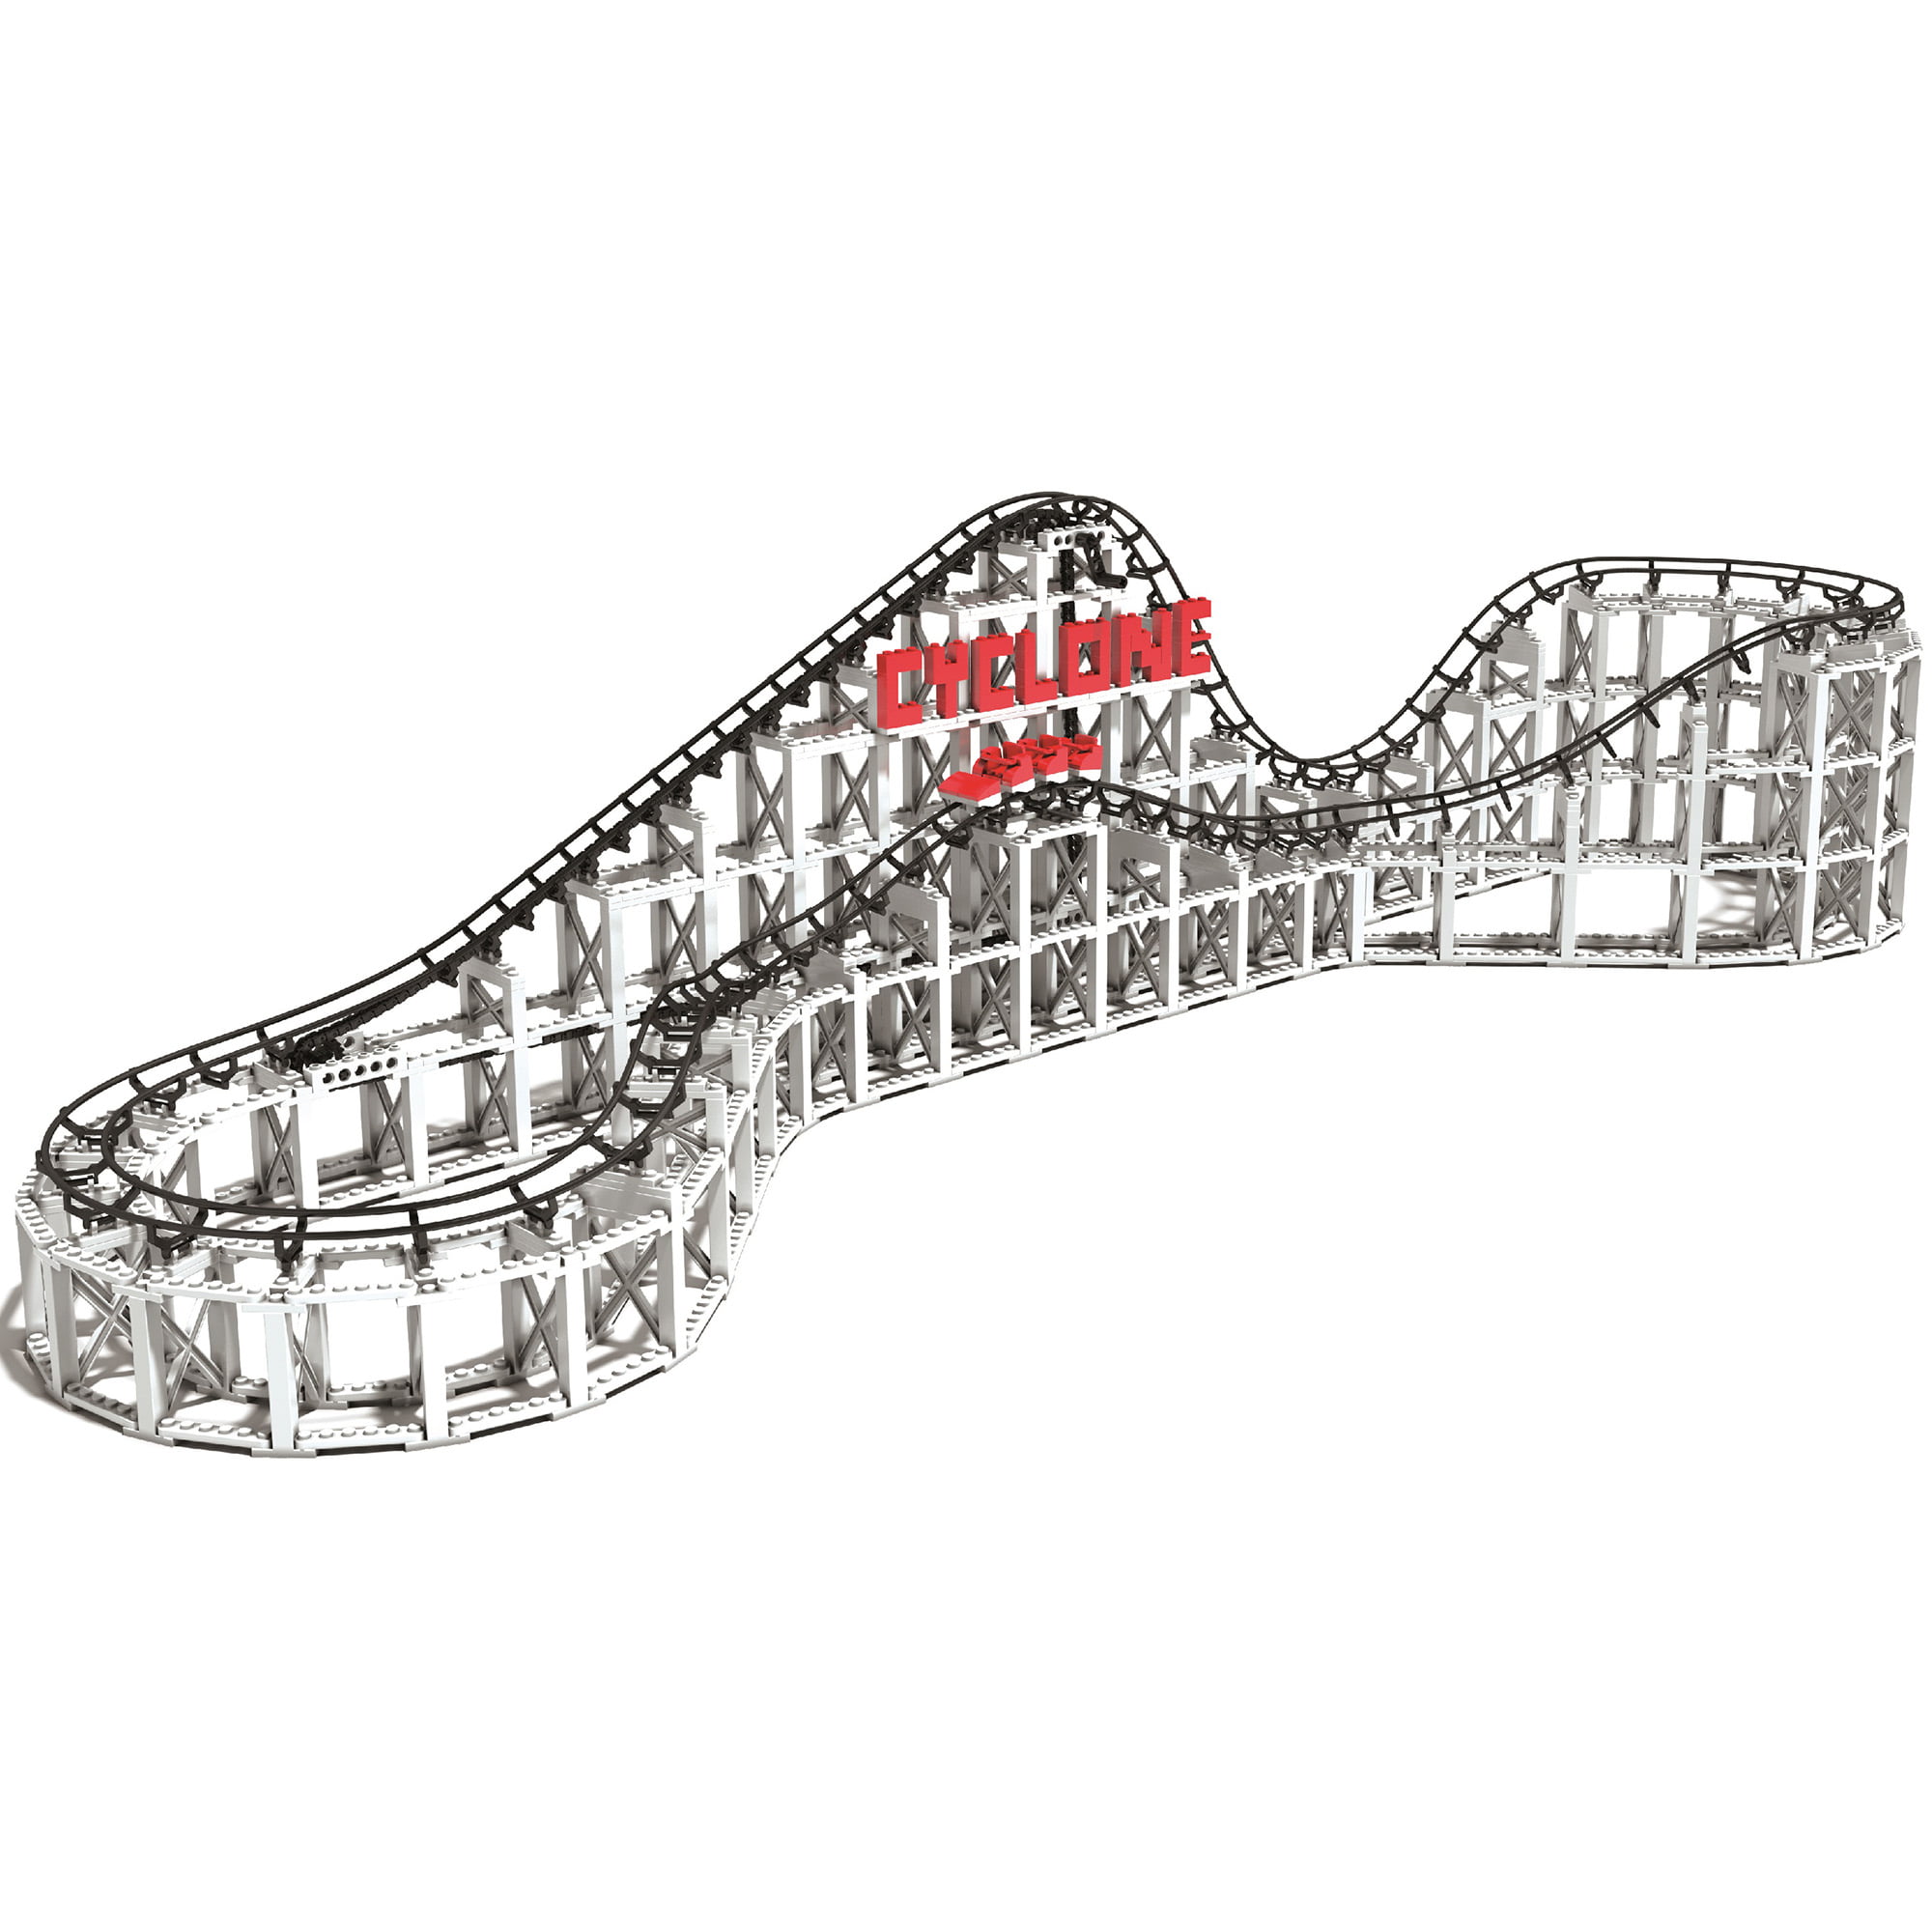 3D Metal Model Kit Roller Coaster NEW Free Shipping 